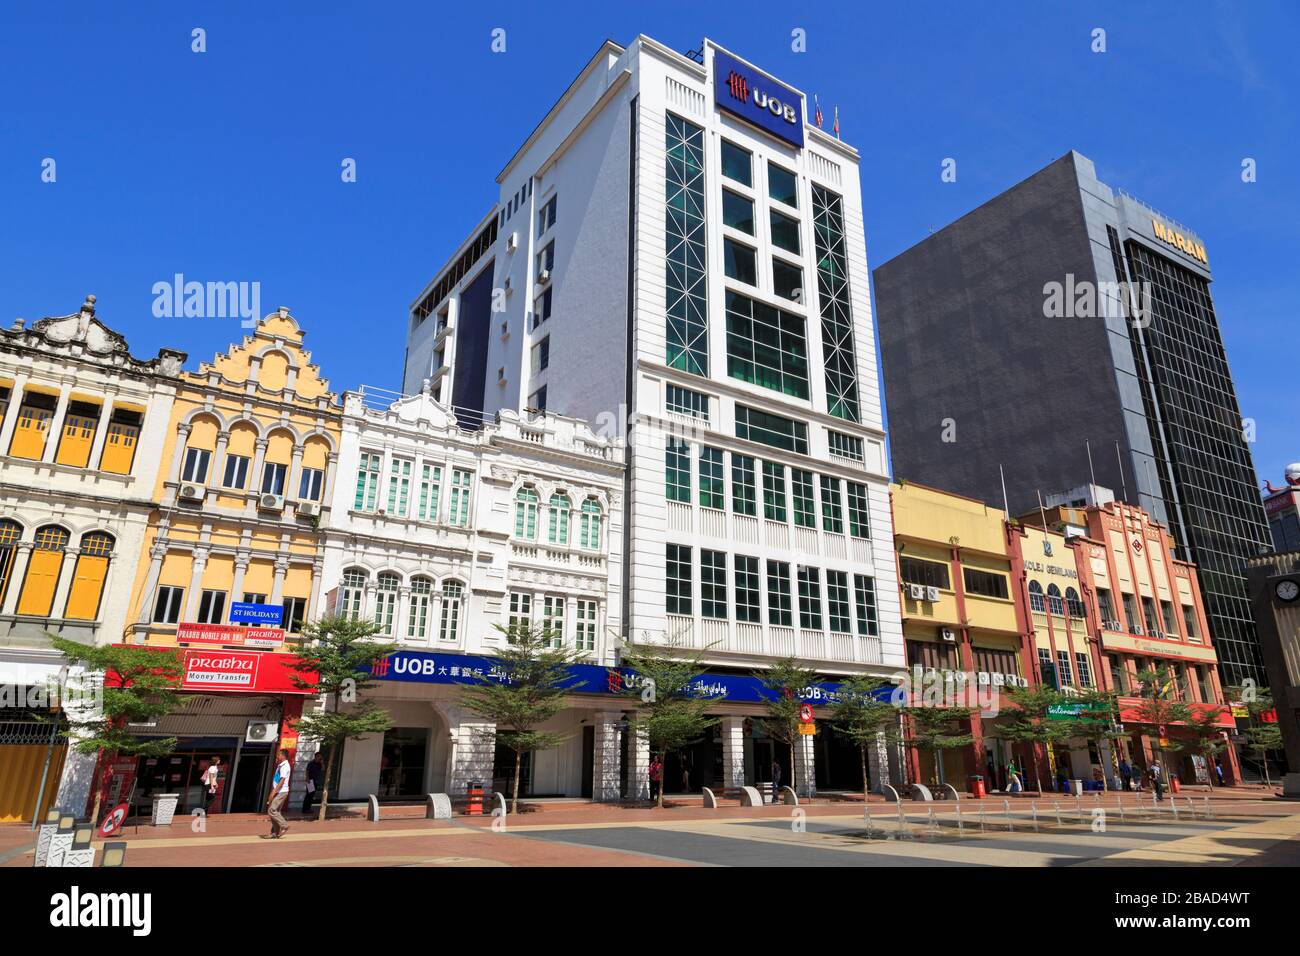 Dutch Gables auf dem Old Market Square, Kuala Lumpur, Malaysia, Asien Stockfoto